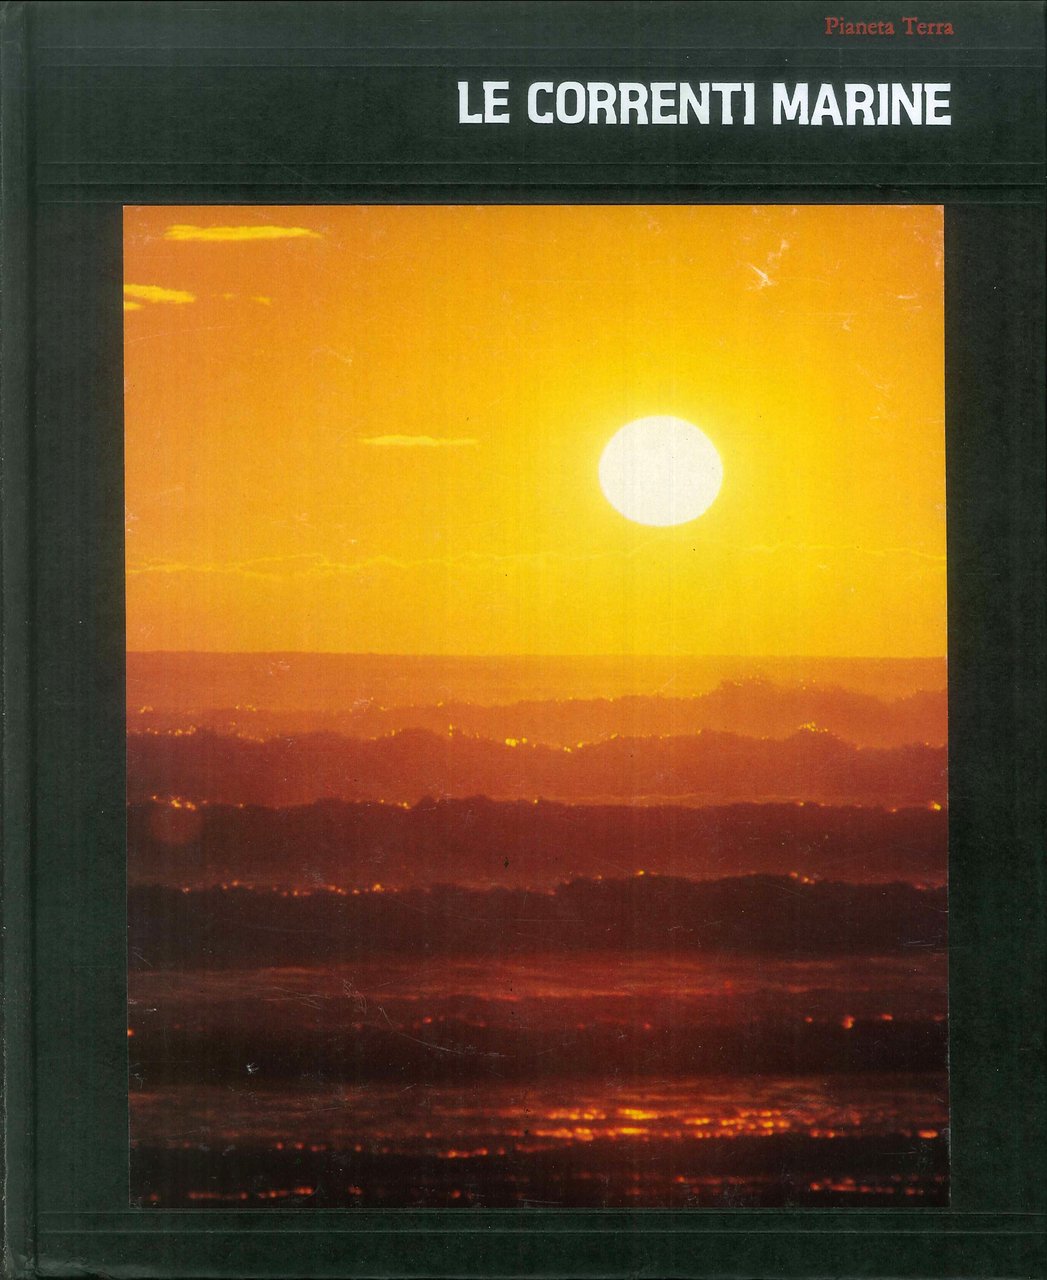 Pianeta Terra: le Correnti Marine, Segrate, Arnoldo Mondadori Editore, 1985